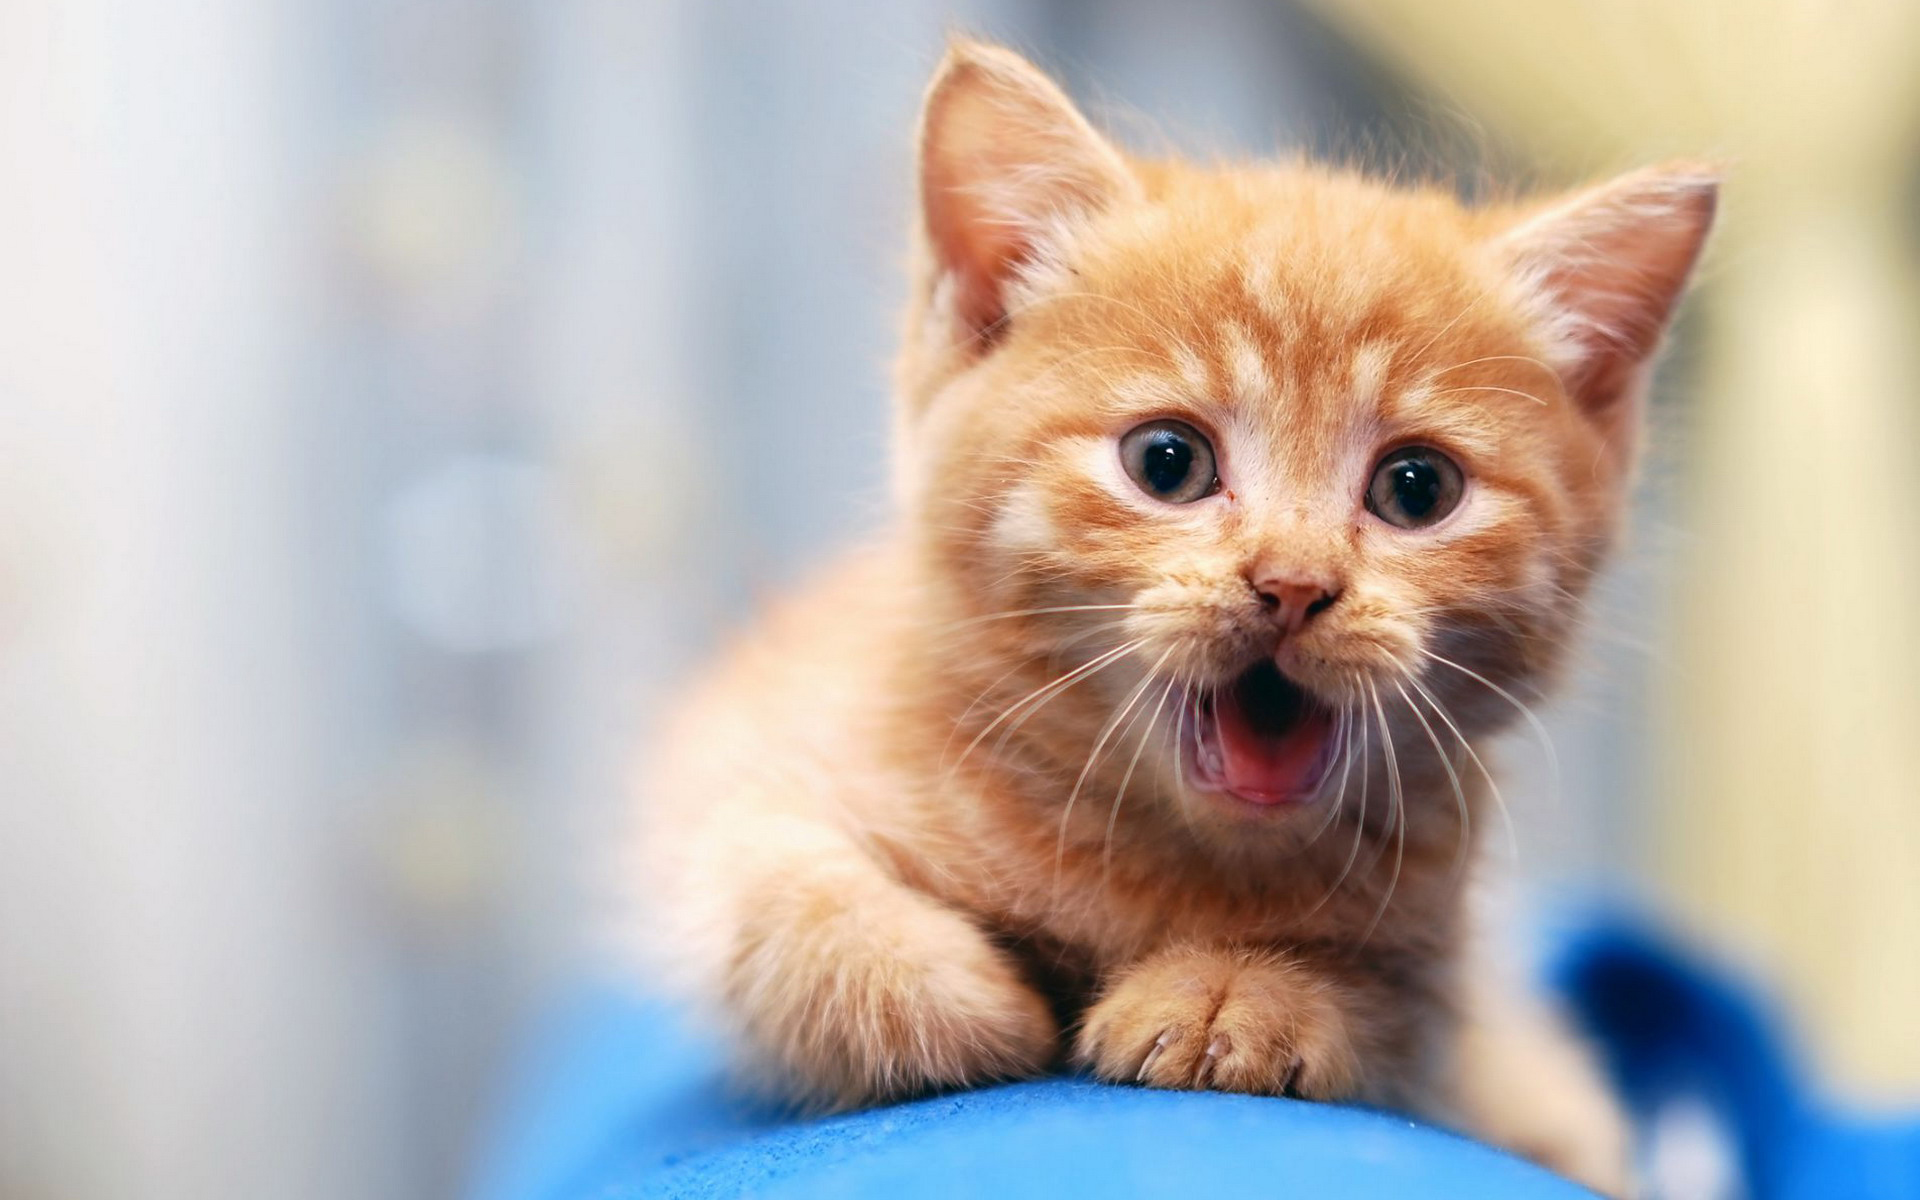 Cute Kittens For Desktop Wallpapers